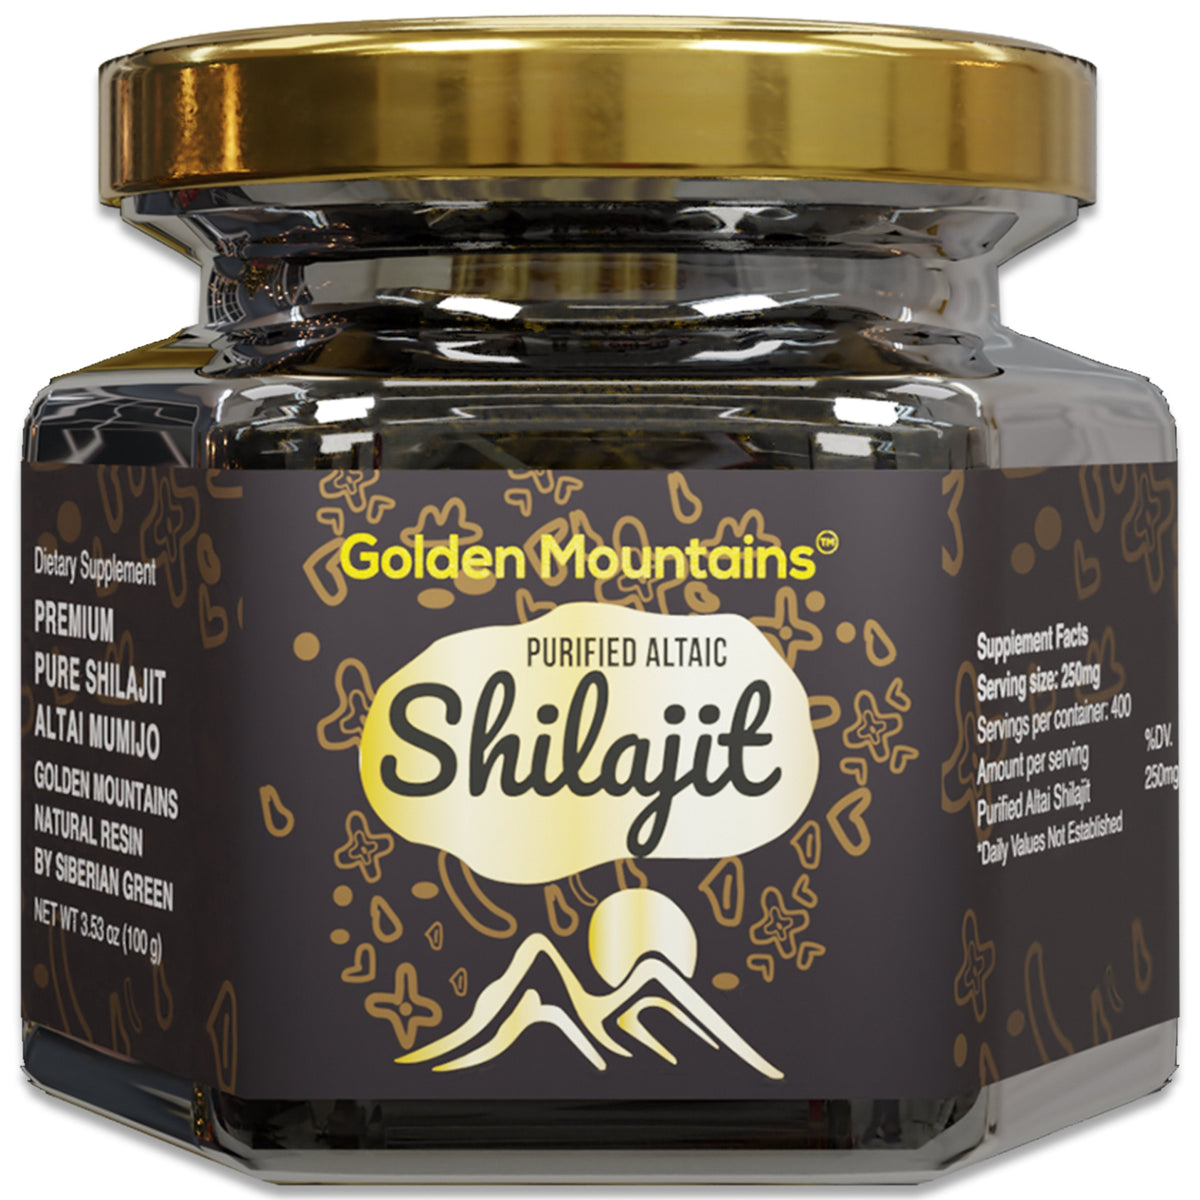 Golden Mountains Shilajit Resin Premium Pure Authentic Siberian Altai 100g - Measuring Spoon – Exclusive Quality Certificate